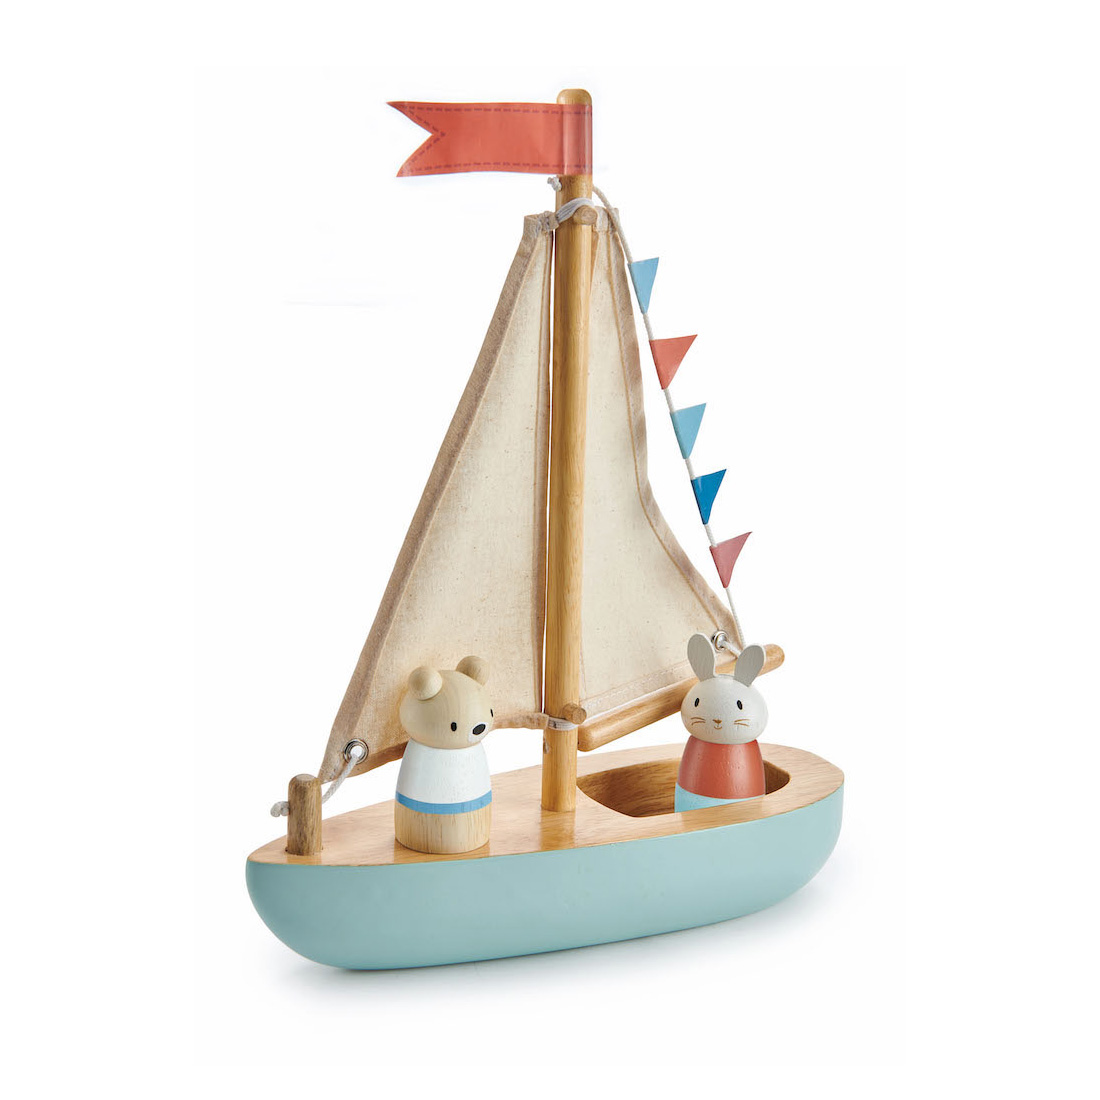 Barca din lemn a lui Bubble si Squeak, Tender Leaf Toys, Sailaway Boat Barca imagine 2022 protejamcopilaria.ro